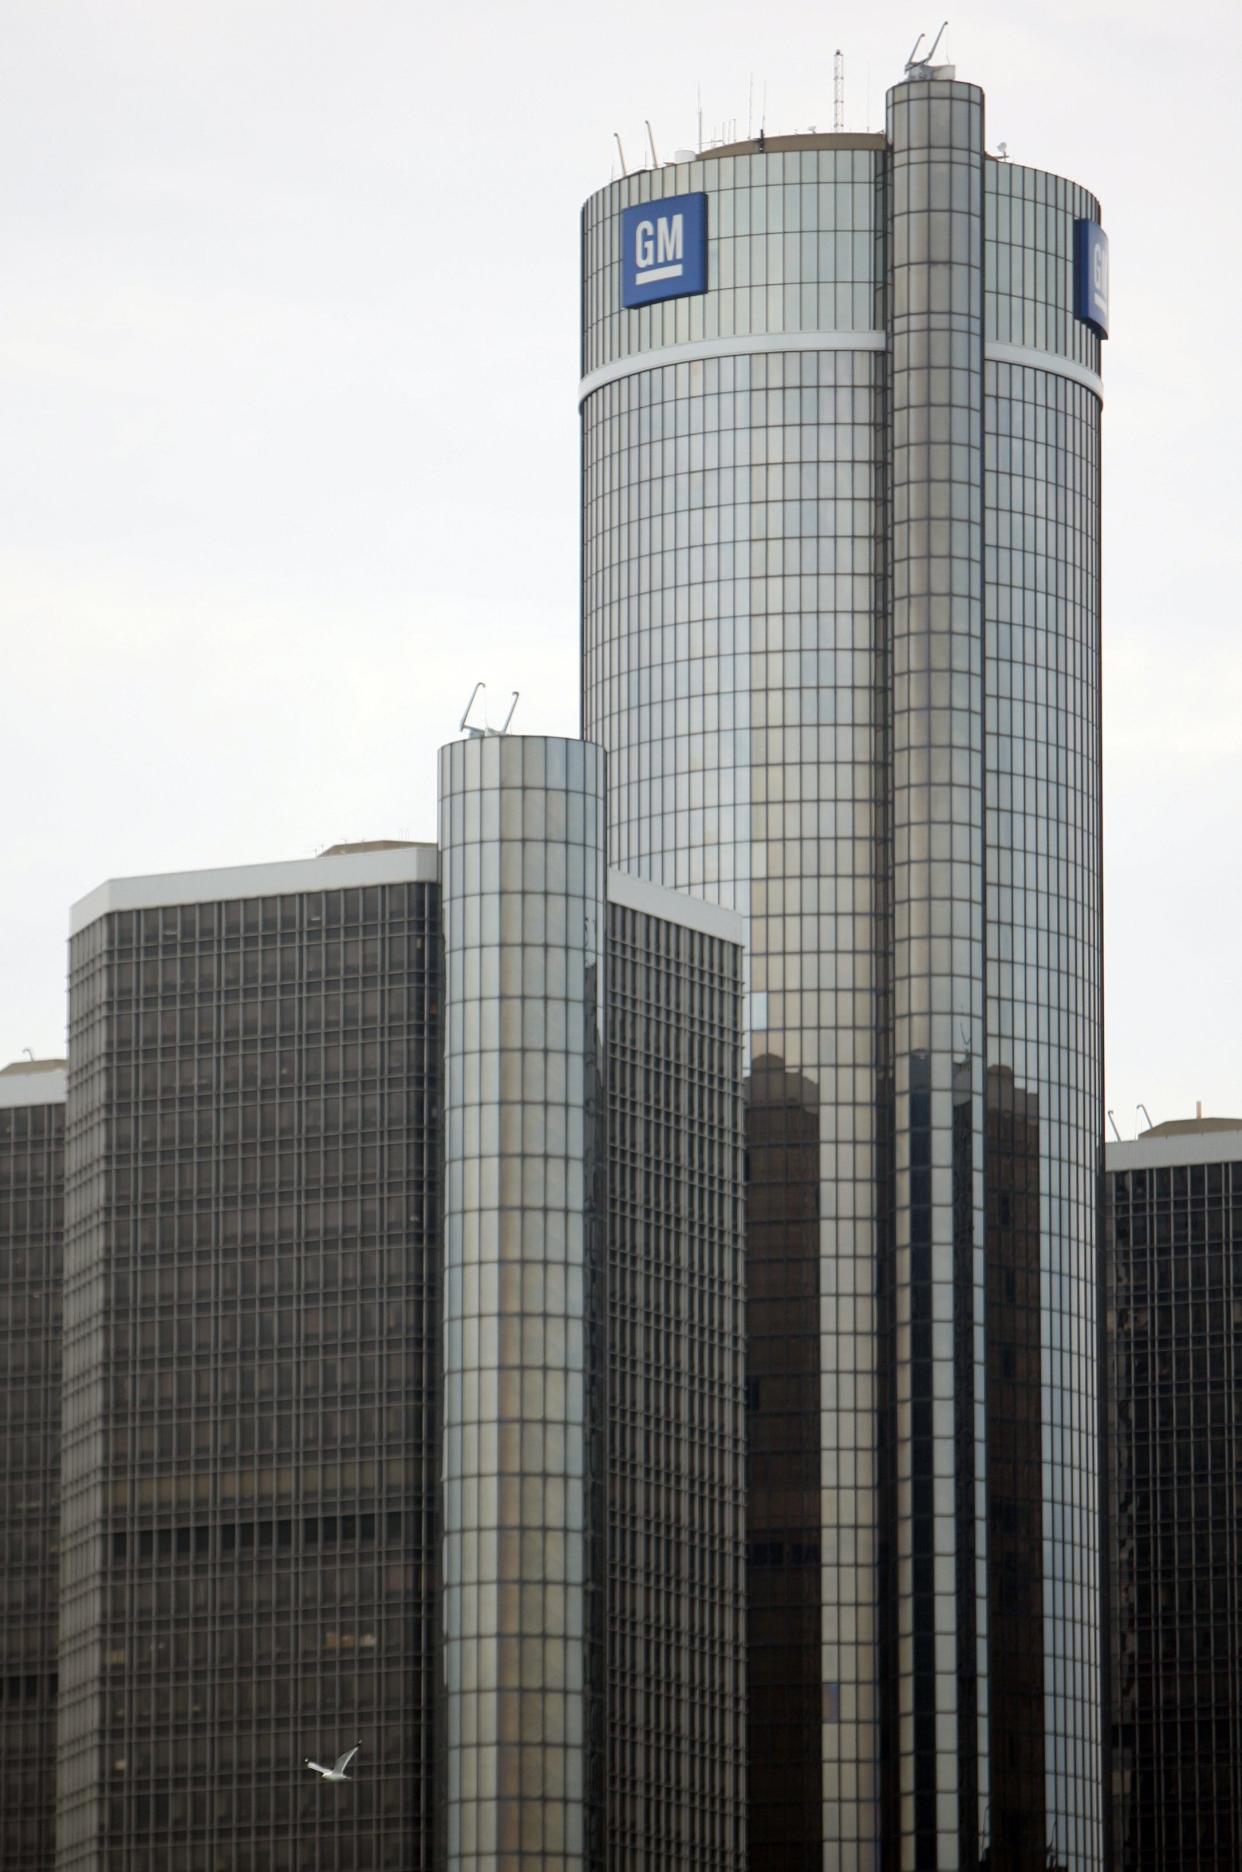 General Motors' headquarters at the Renaissance Center in Detroit